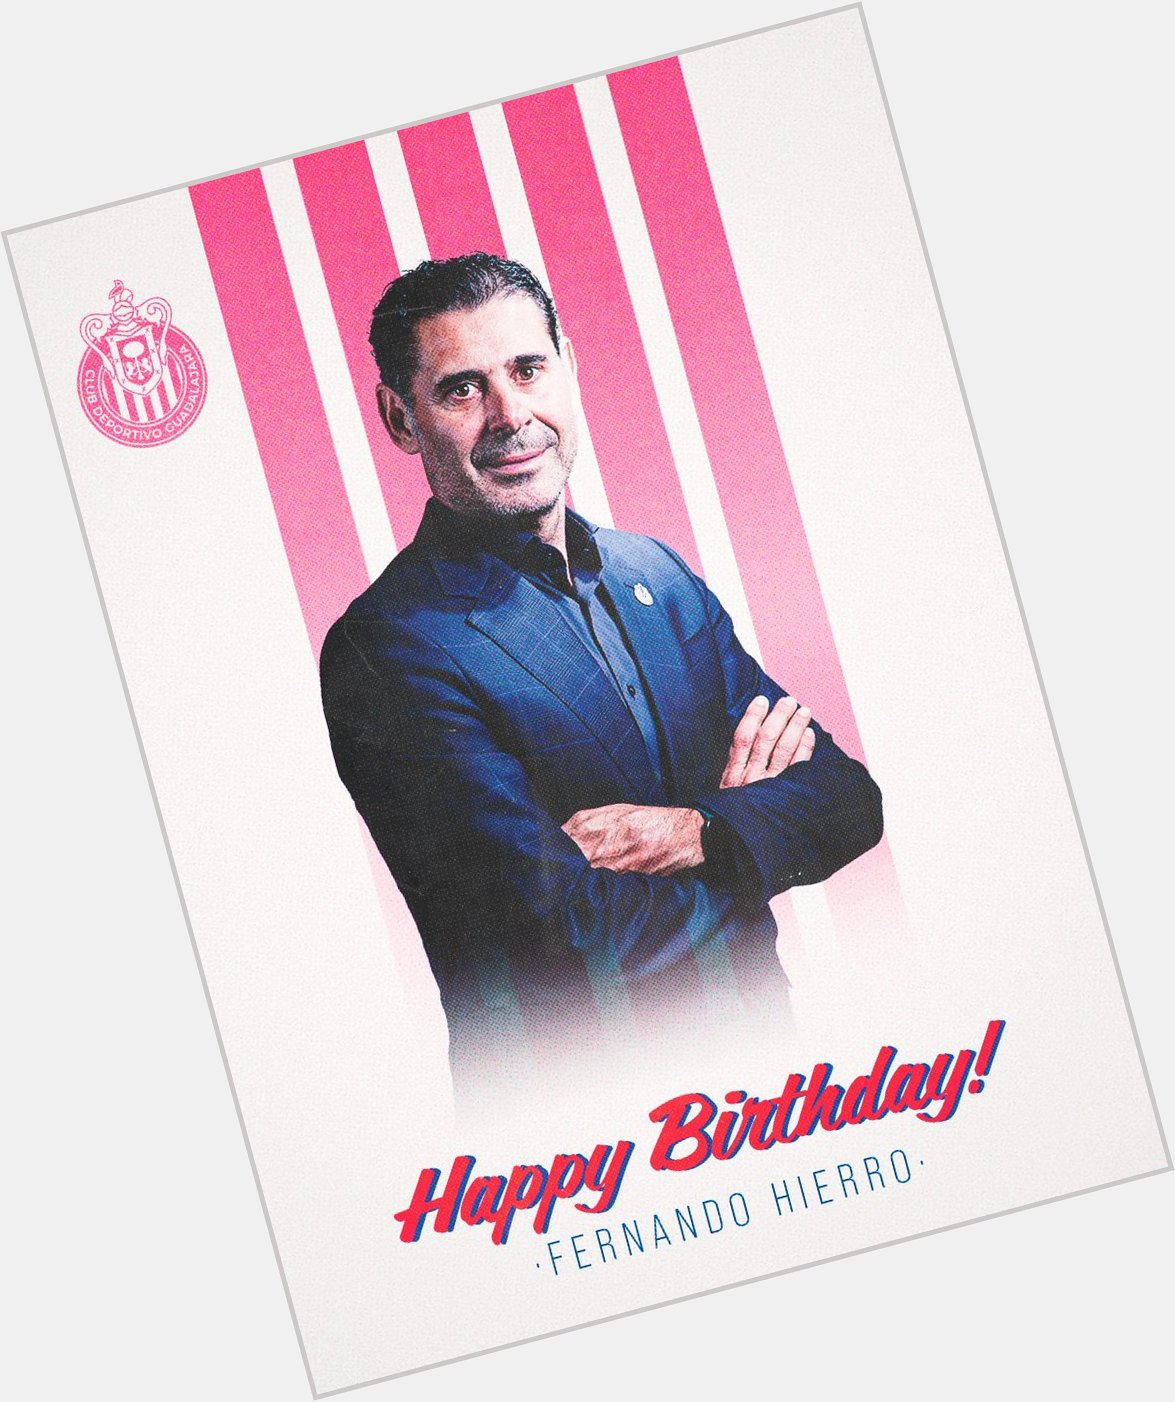 The legend himself.    Happy birthday, Fernando Hierro!   All the best, boss!   